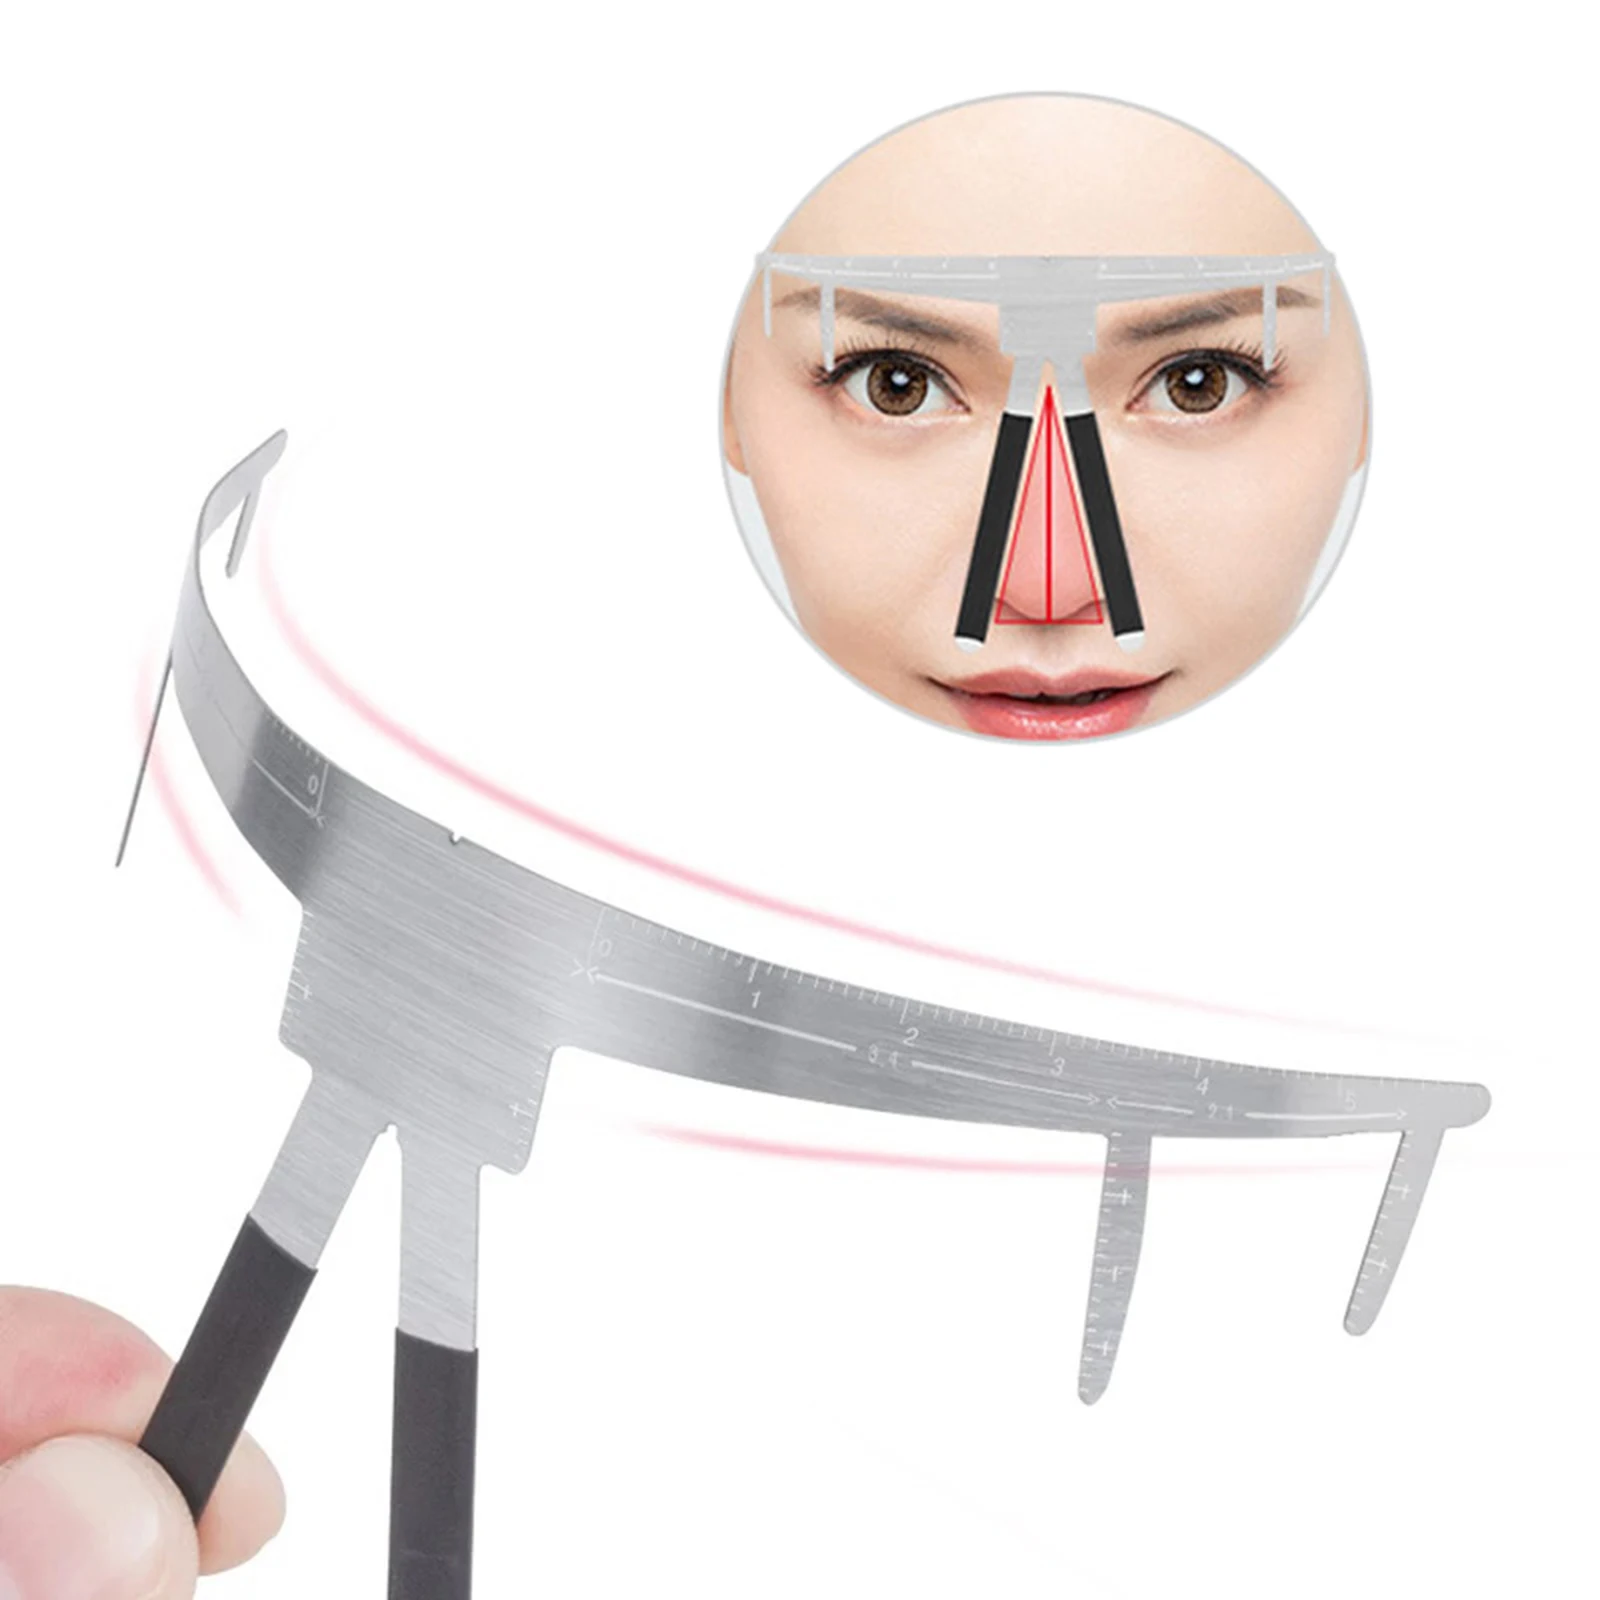 Steel Tattoo Eyebrow Ruler Eyebrow Caliper Symmetrical Tool Makeup Accessories Parts Tool for Eyebrow Measuring Positioning